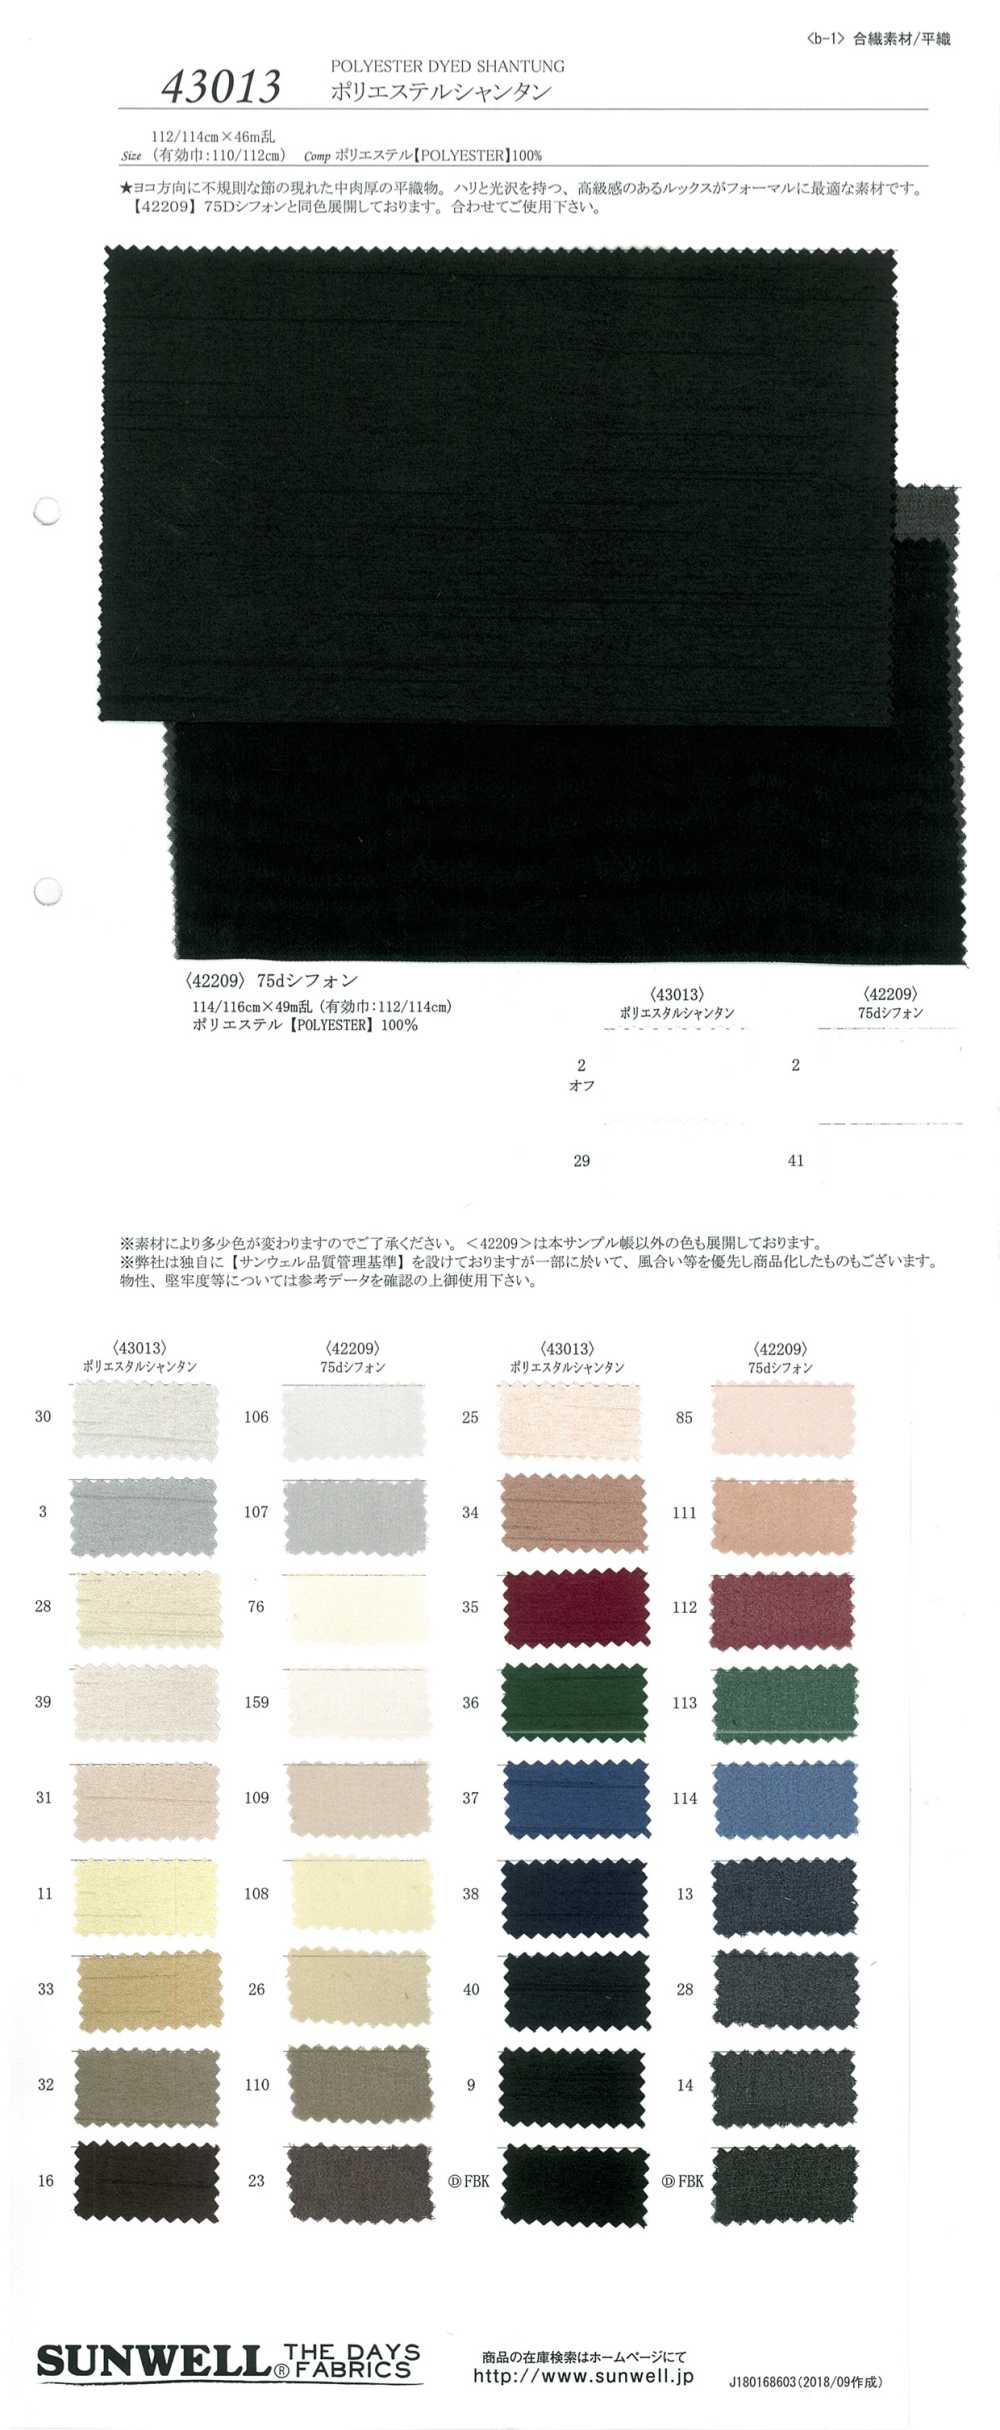 43013 Polyester Shantung[Textilgewebe] SUNWELL